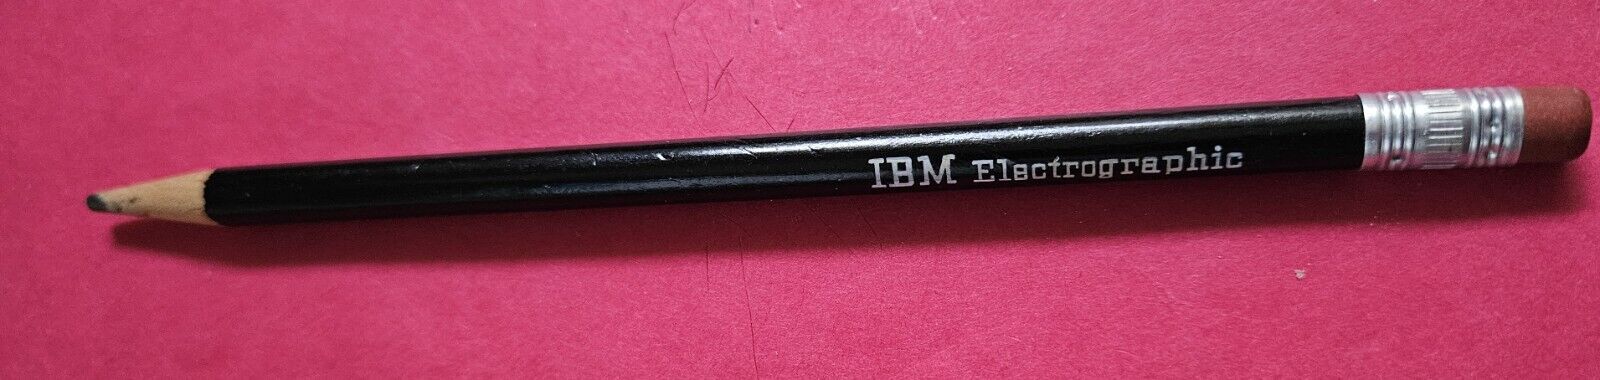 IBM Electrographic Pencil - Used Vintage